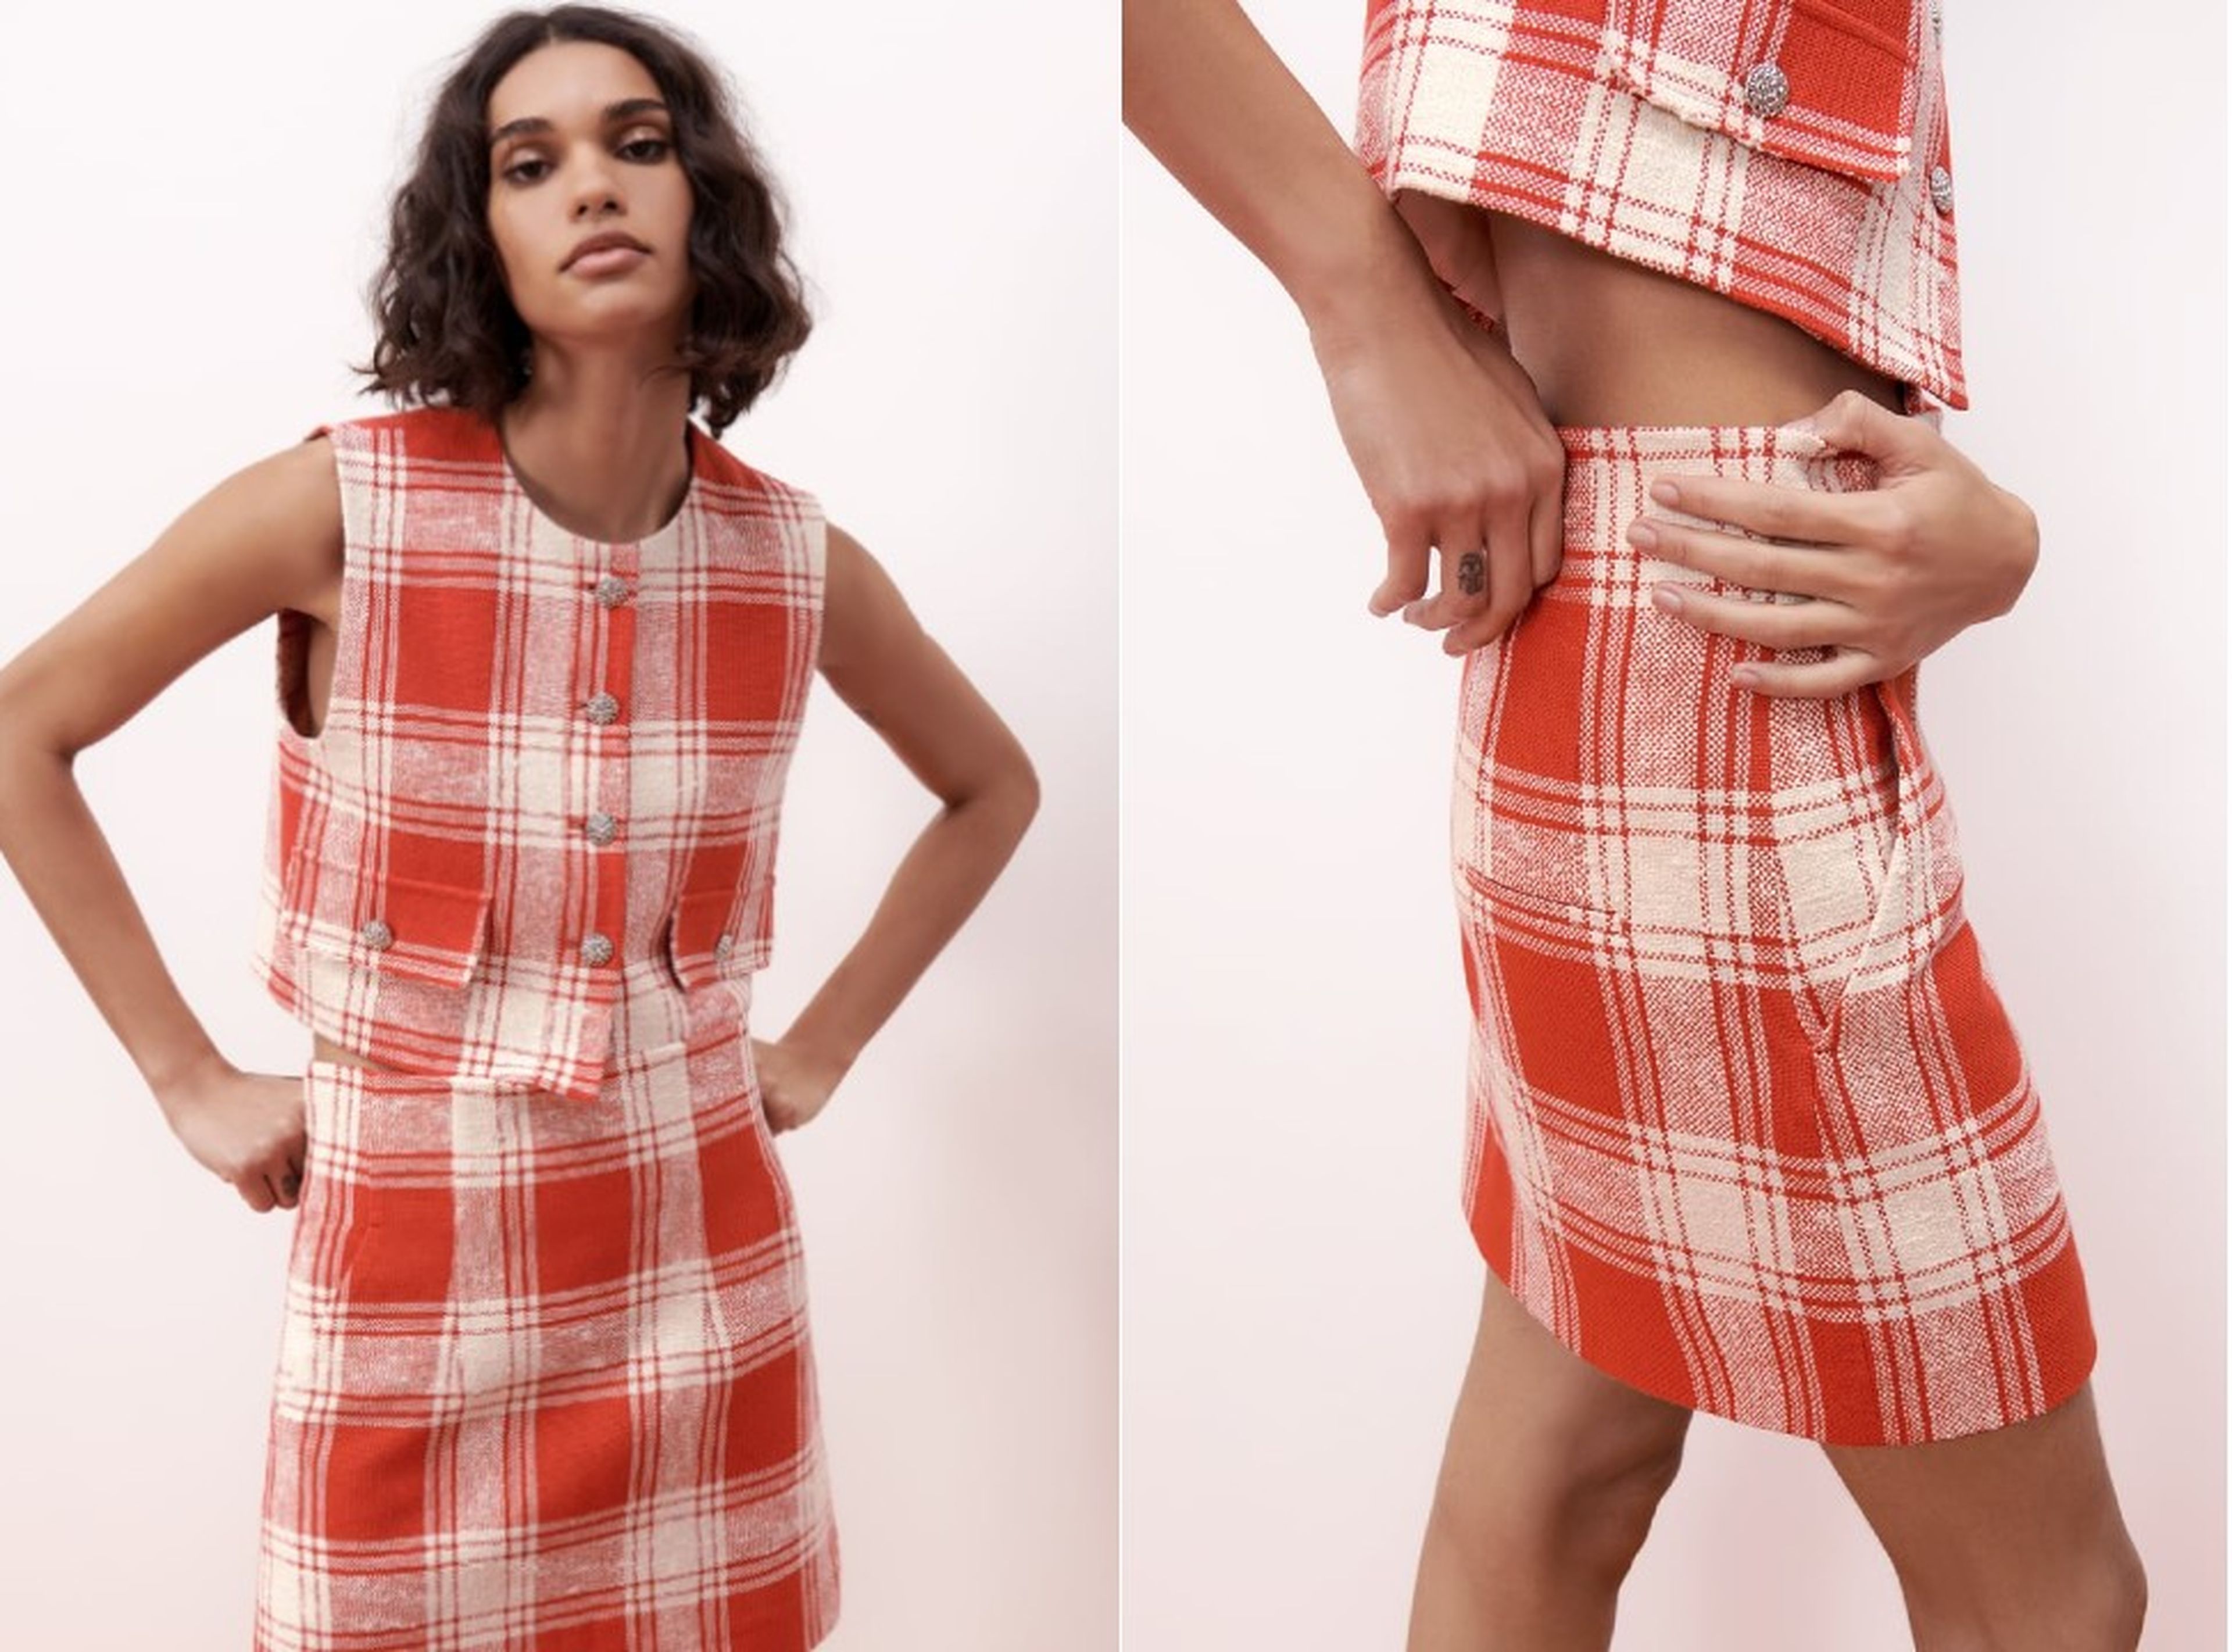 Rebajas de Zara: 7 faldas que querrás por menos de 10 euros | Business Insider